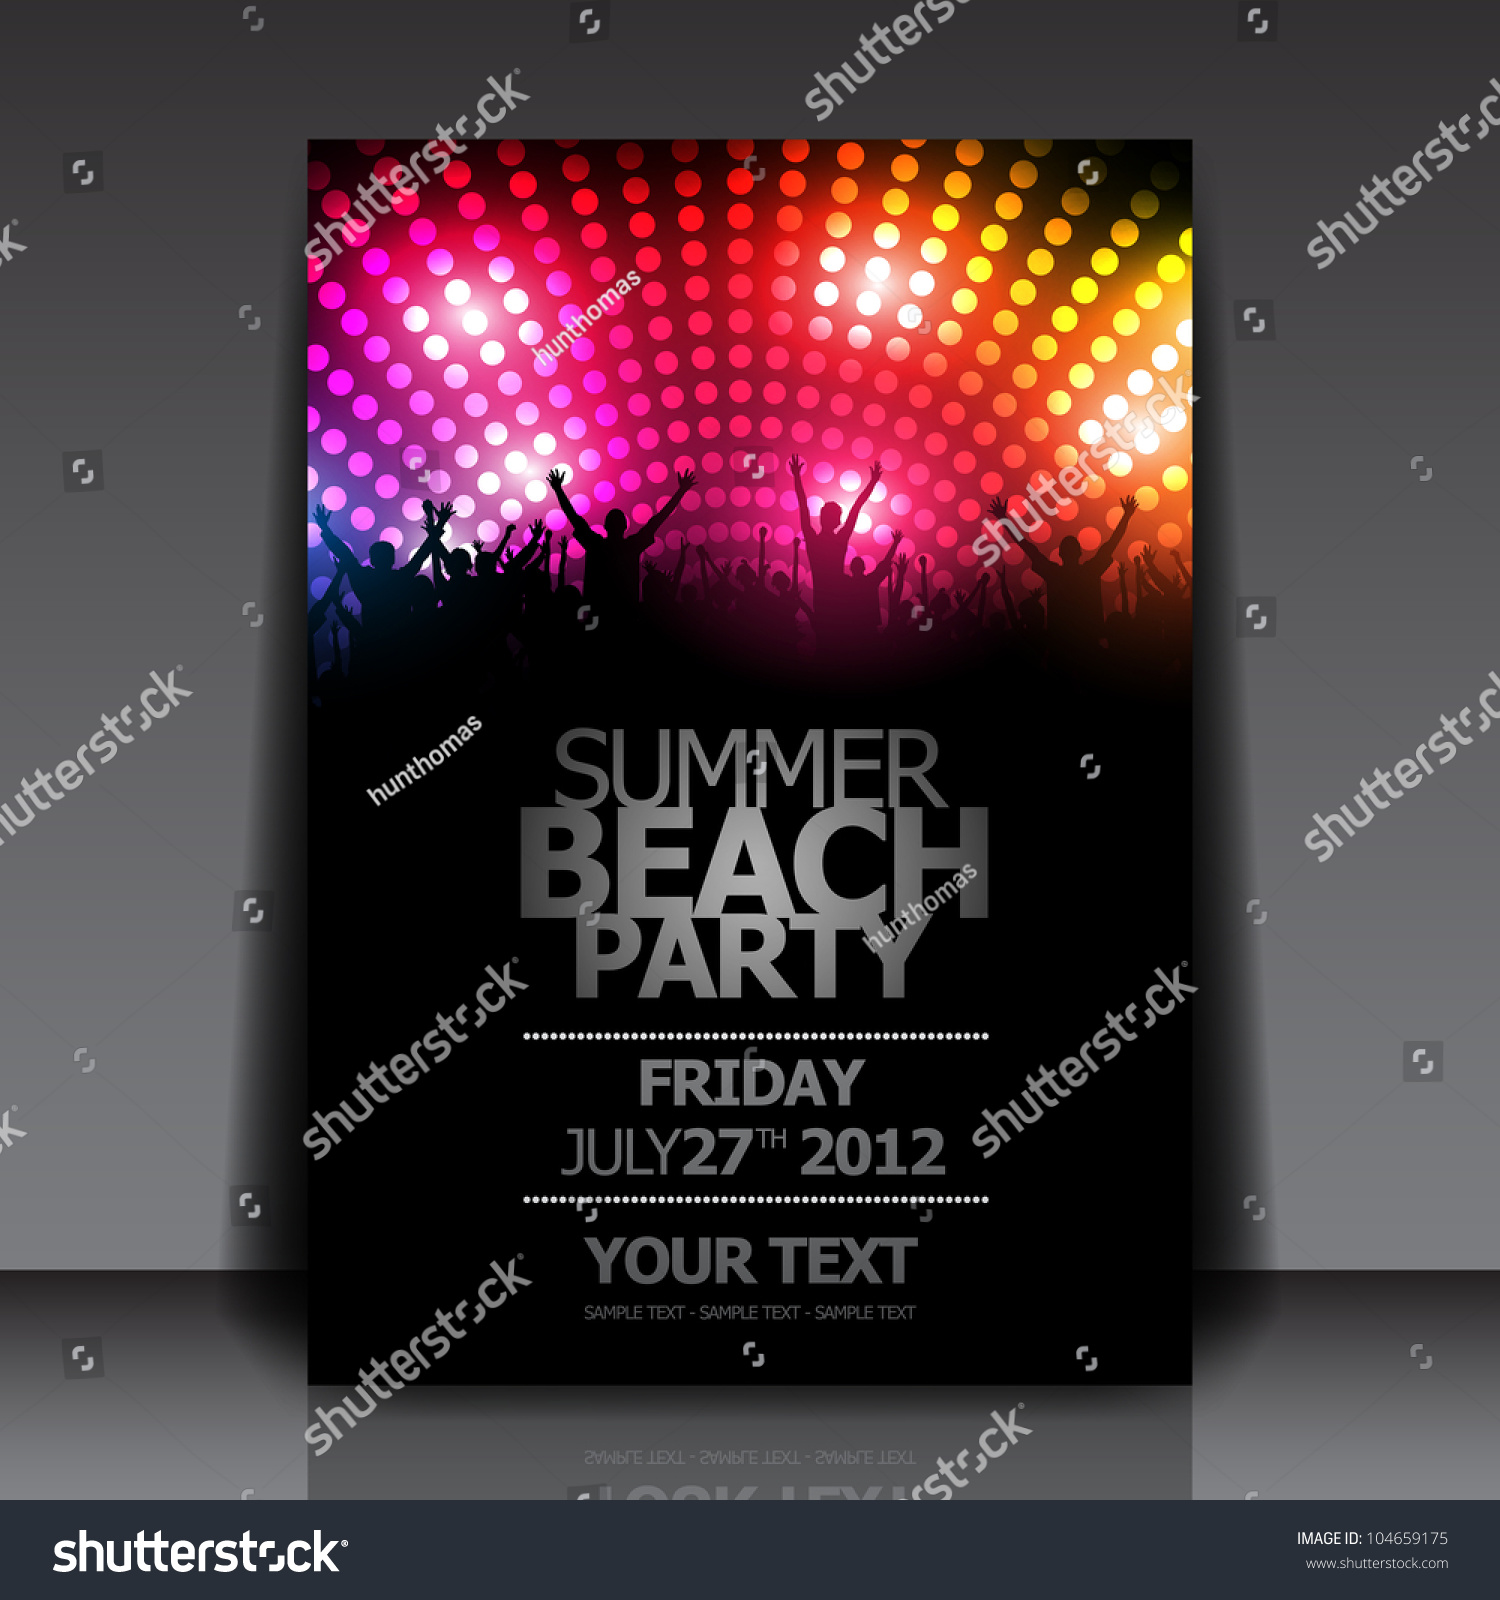 Summer Beach Party Flyer Template - Vector Design - 104659175 ...